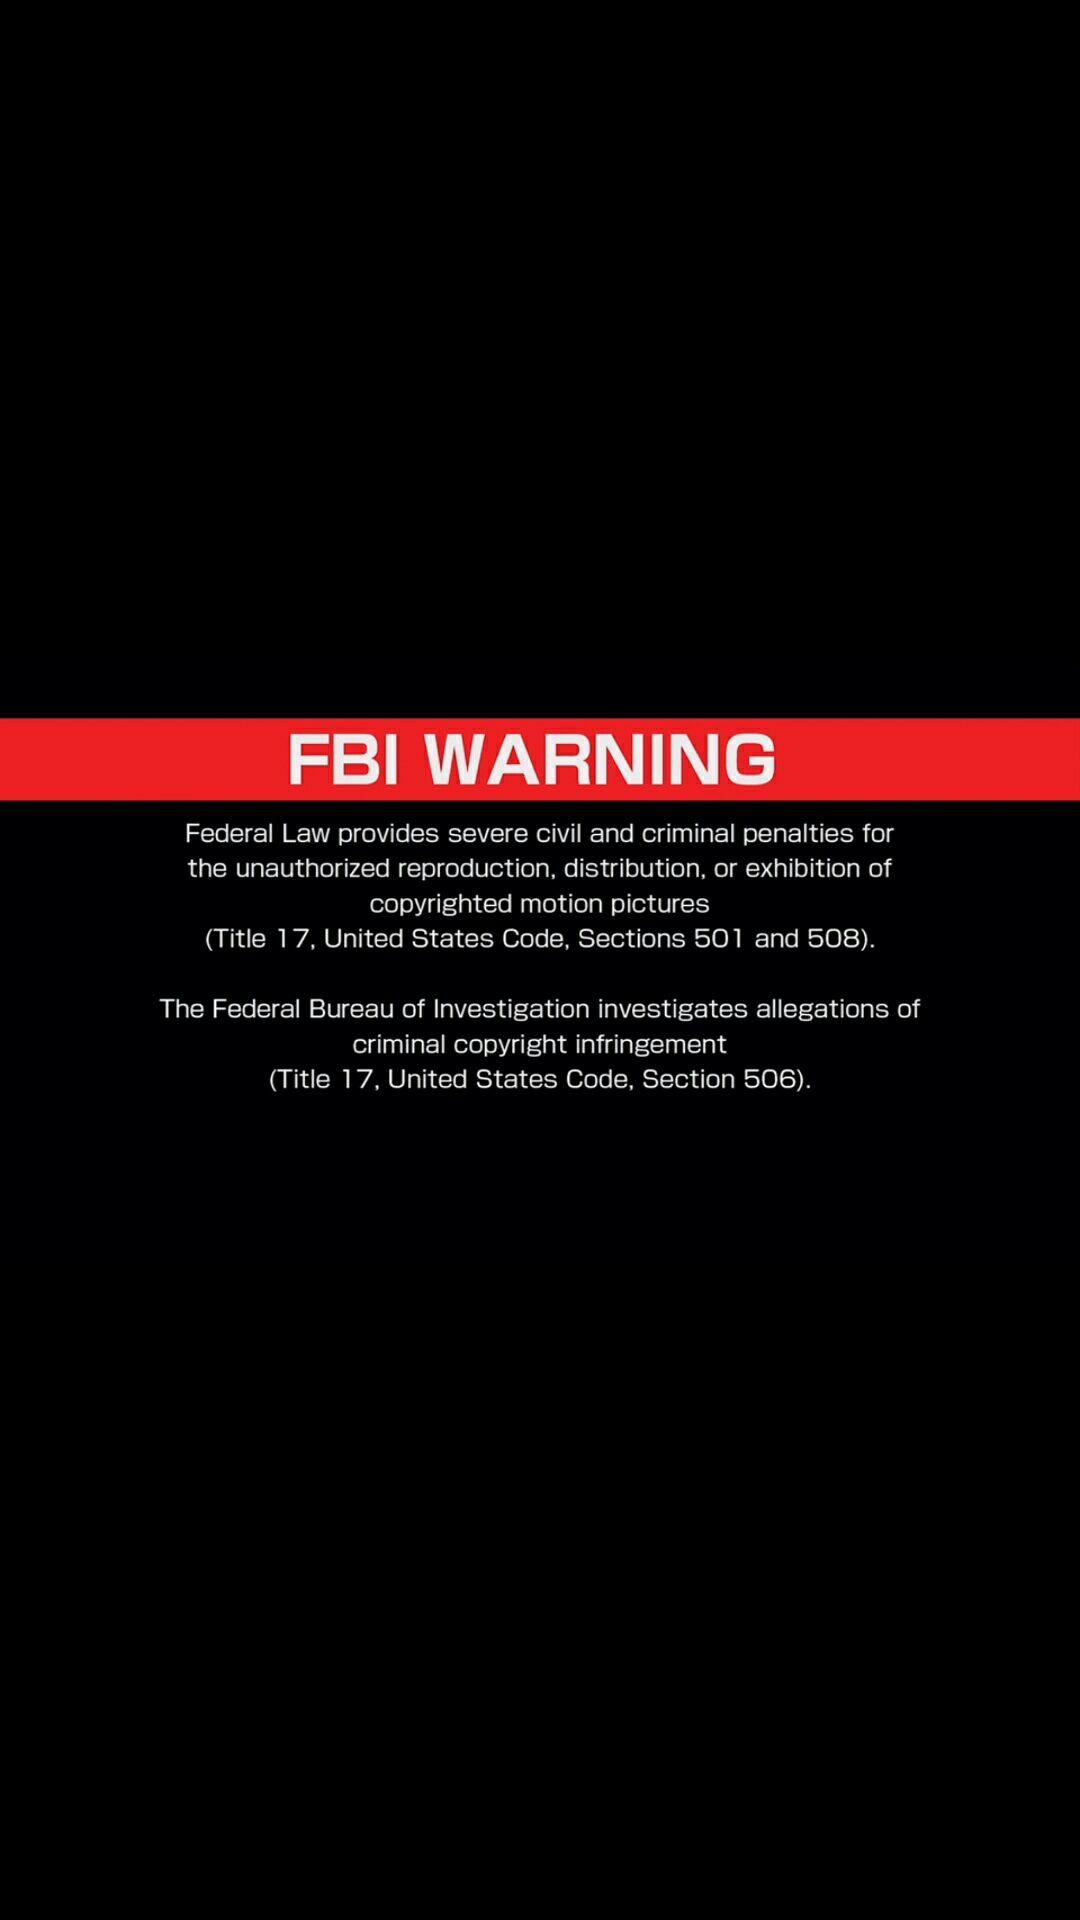 fbi警告竖屏壁纸图片